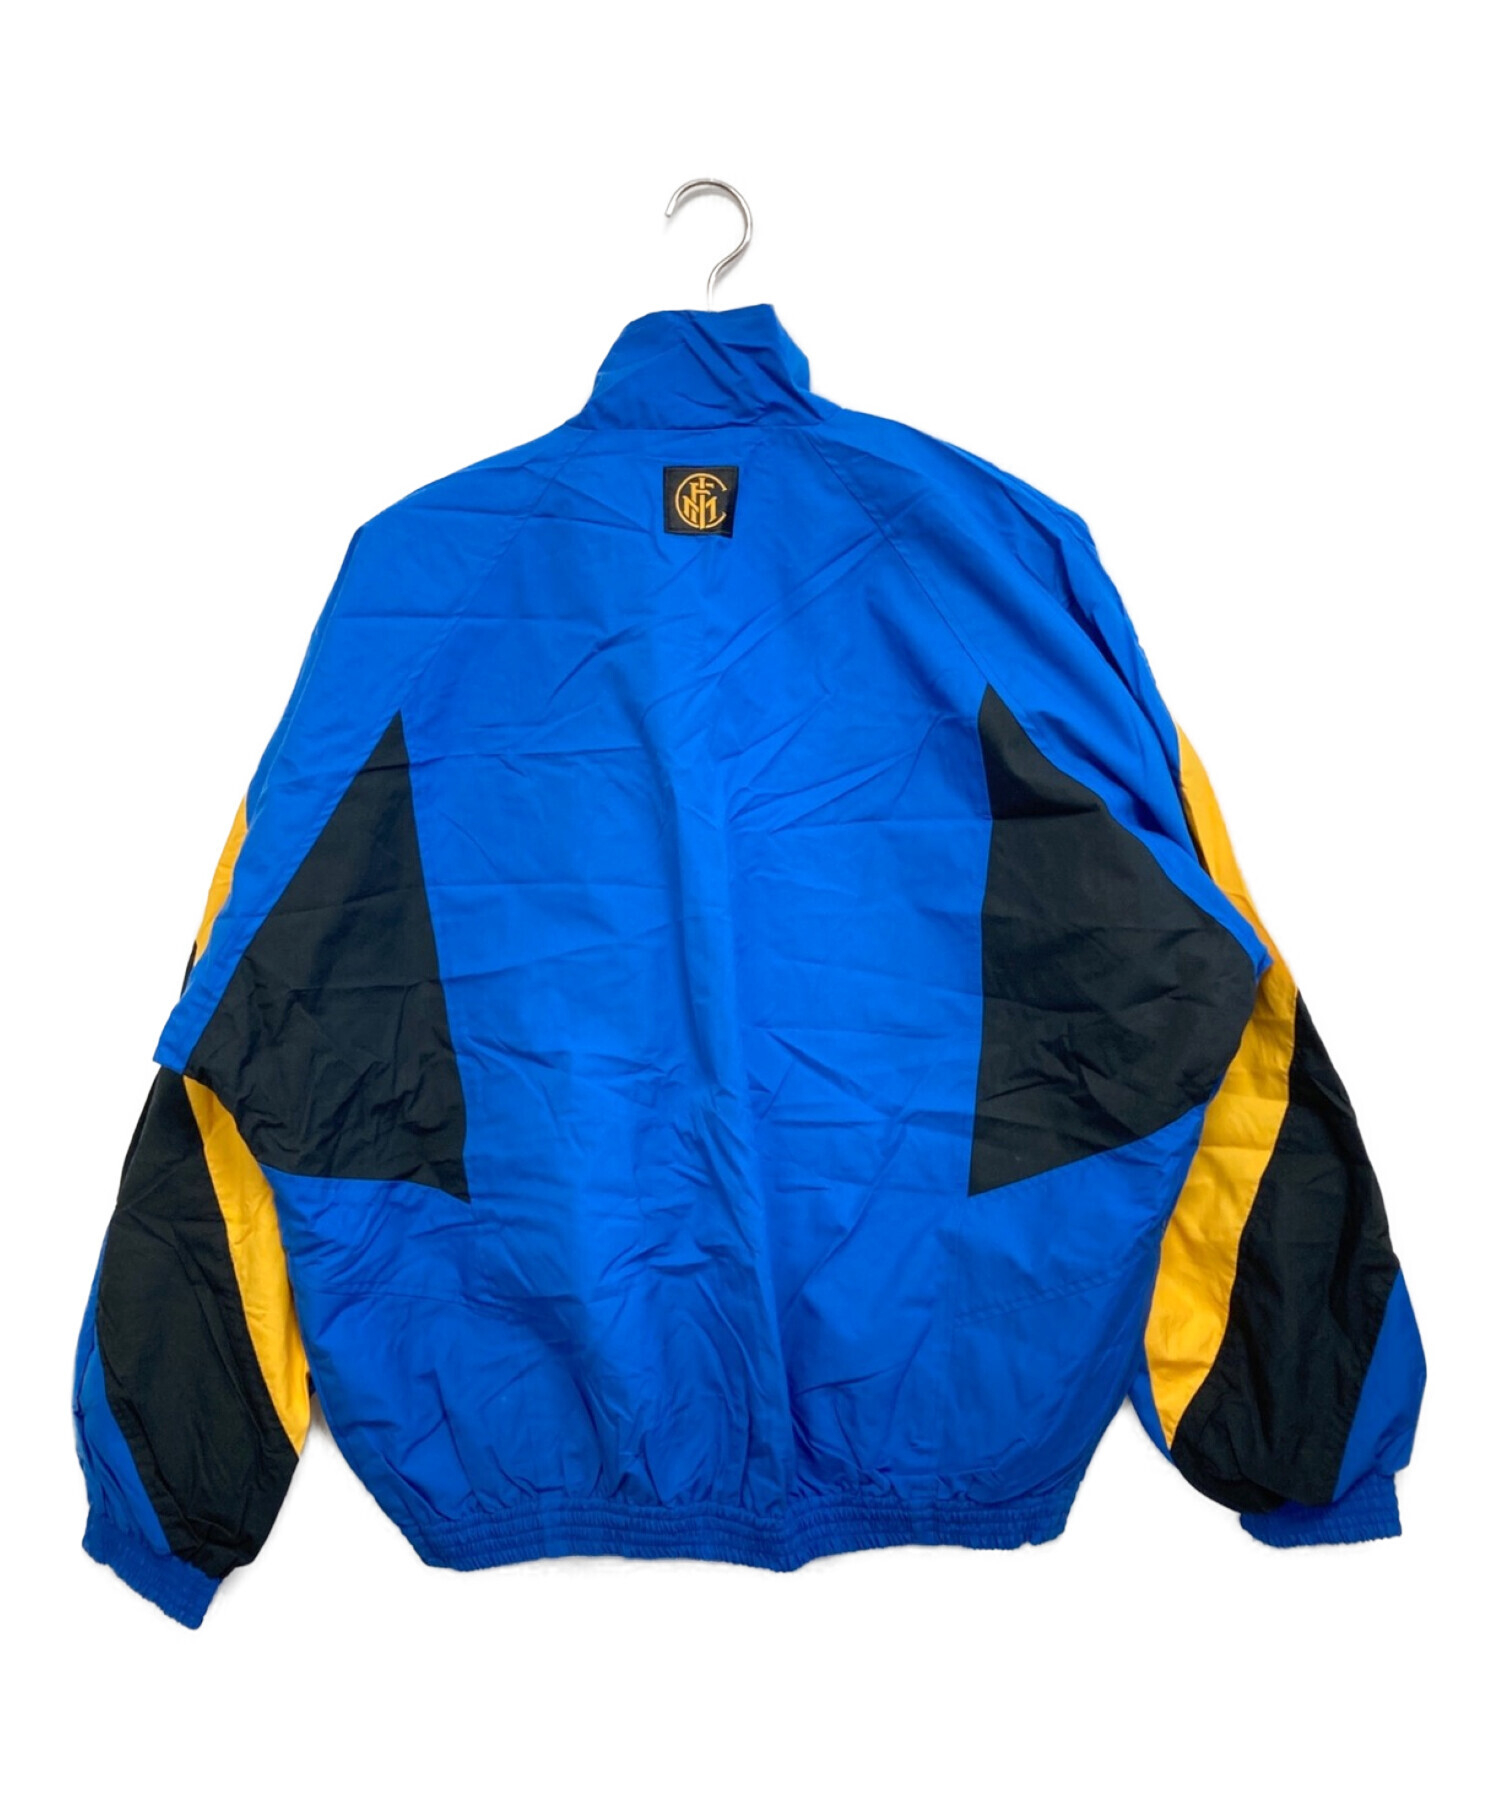 UMBRO (アンブロ) 90’s ナイロンジャケット ブルー×イエロー サイズ:L